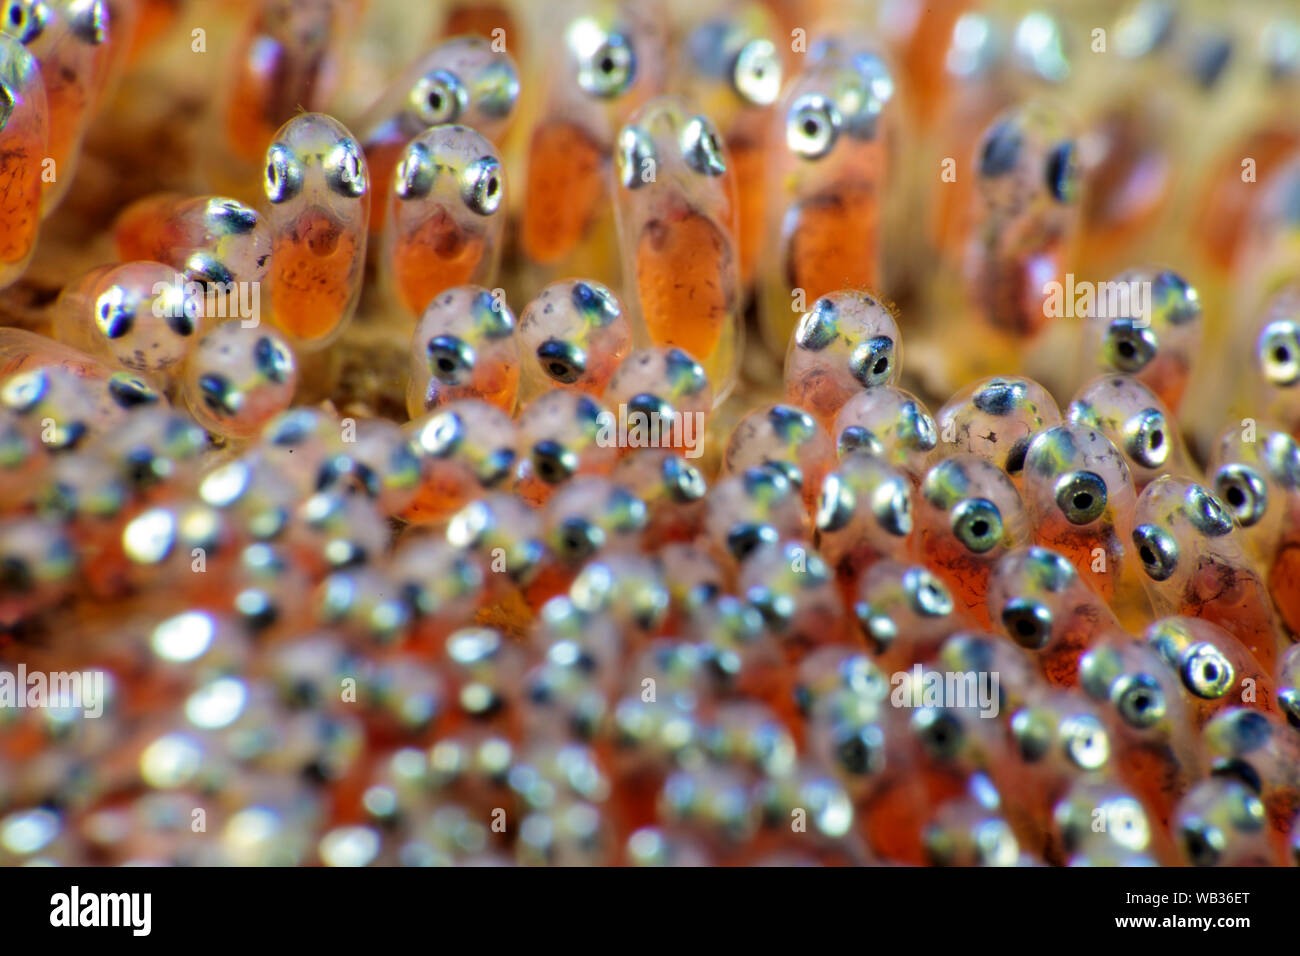 Anemonefish eggs with eyes Stock Photo